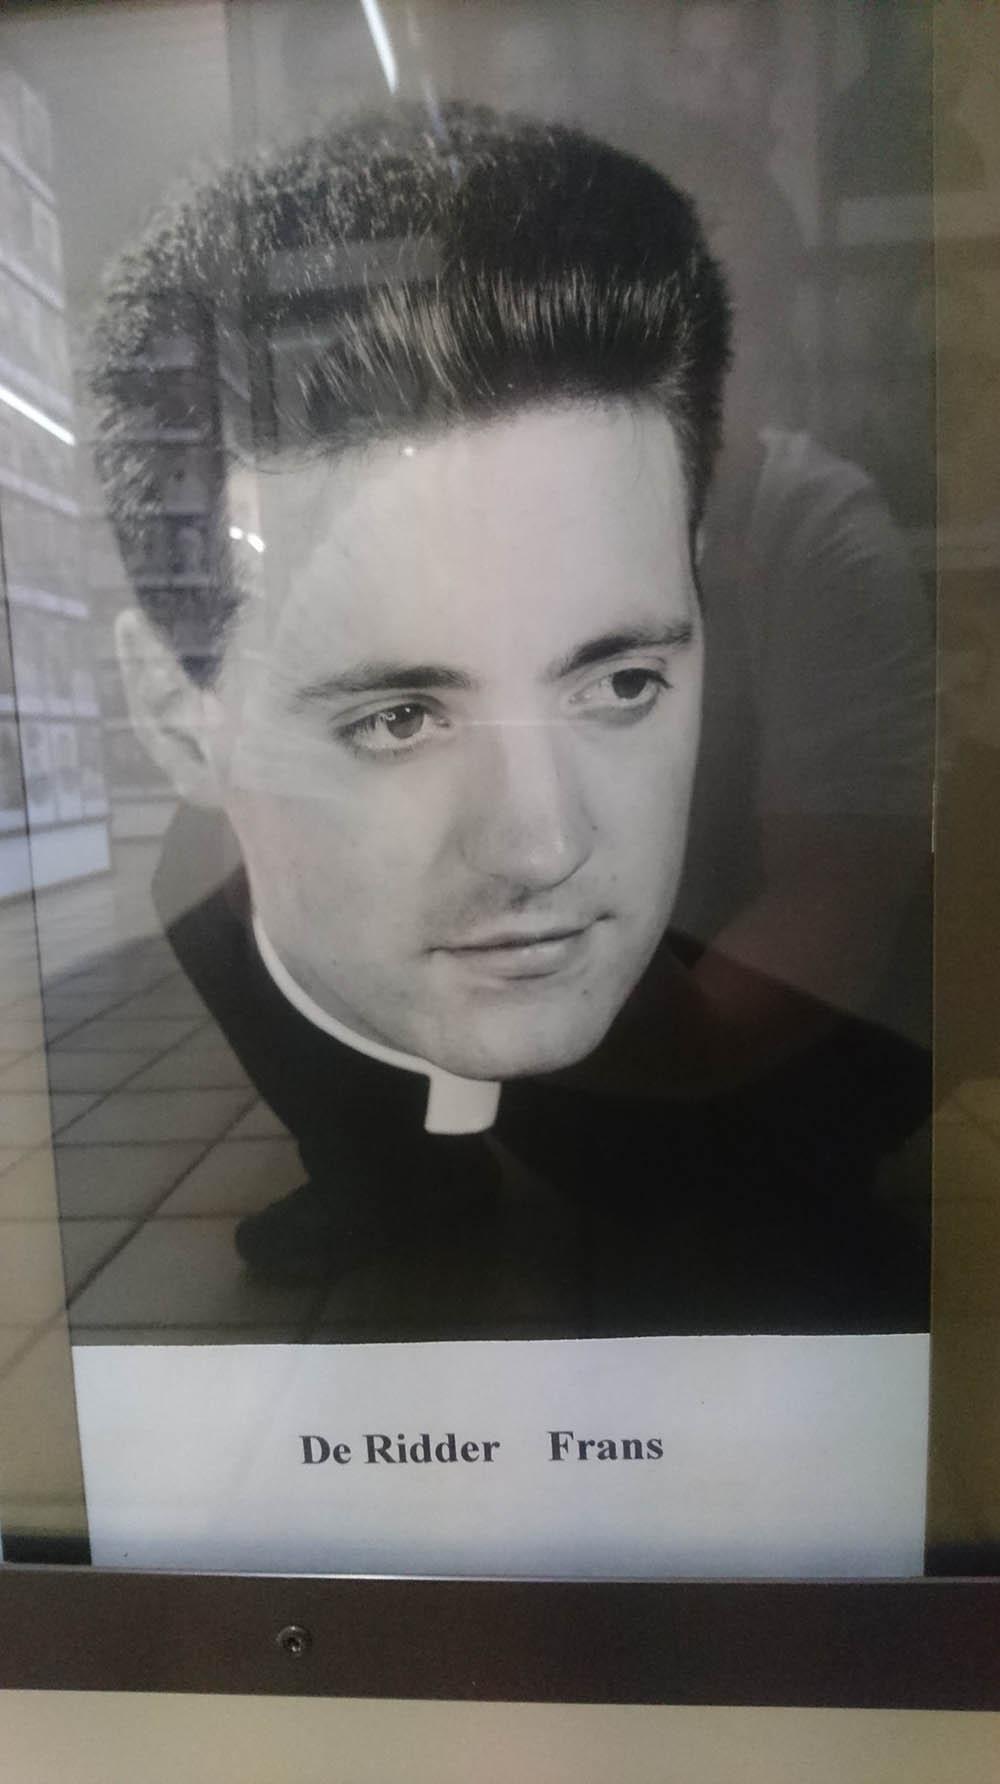 CICM-林瑞德神父（Fr. Frans De Ridder）